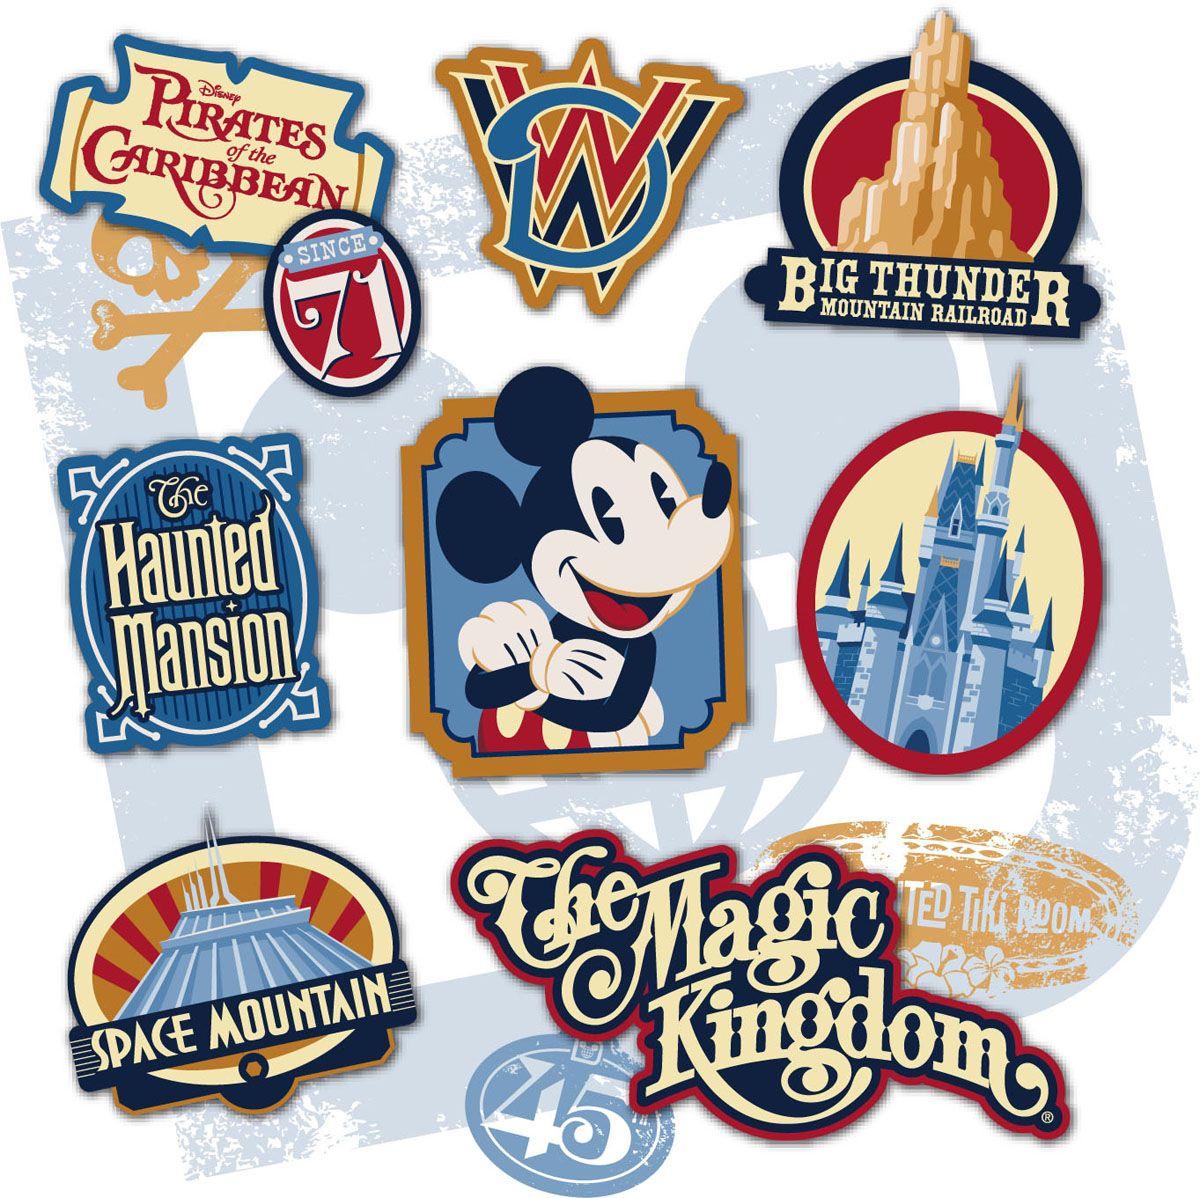 Disney World Magic Kingdom Logo - First Look at Magic Kingdom 45th Anniversary Merchandise Artwork